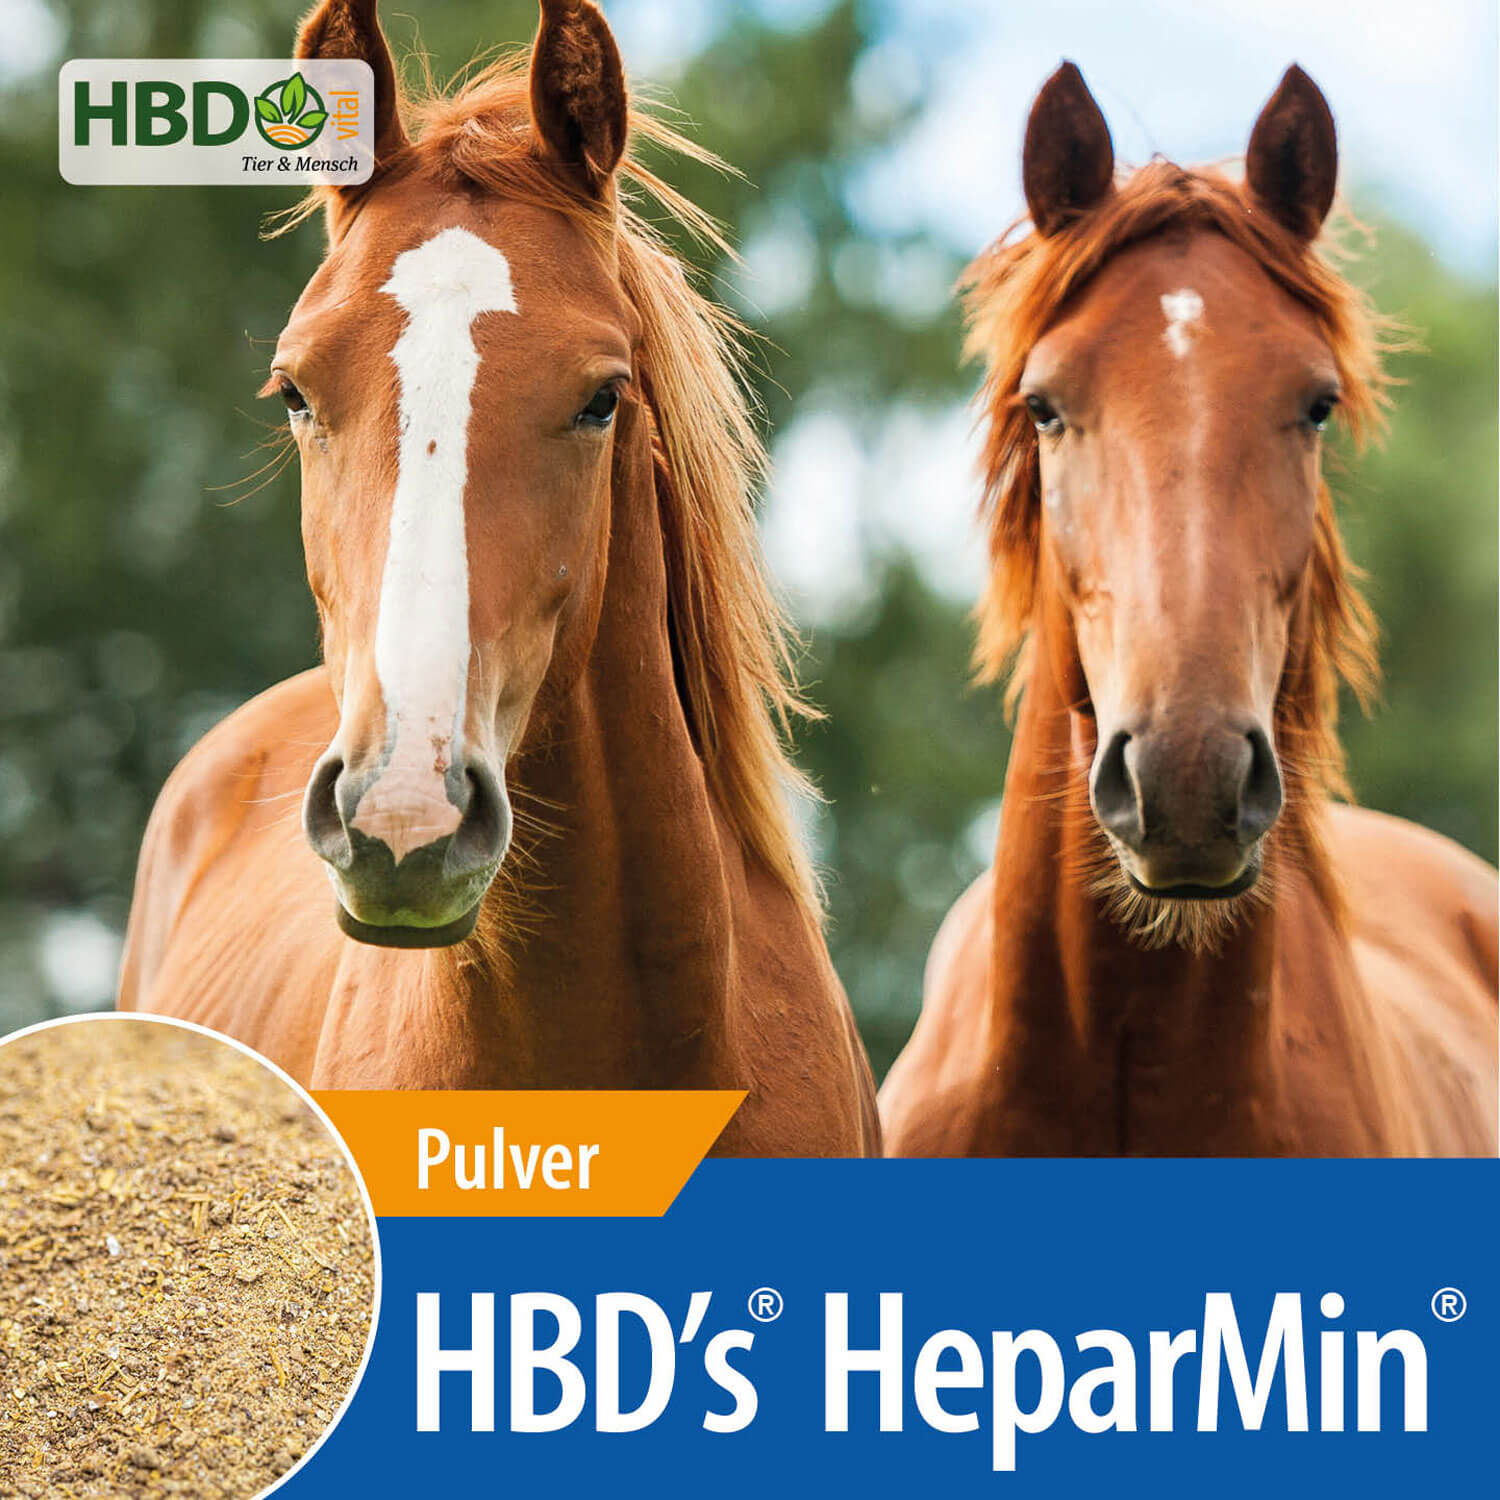 HBD-Agrar - HBD's® HeparMin® - endogenes Muskelaufbaupräparat auf Aminosäurebasis